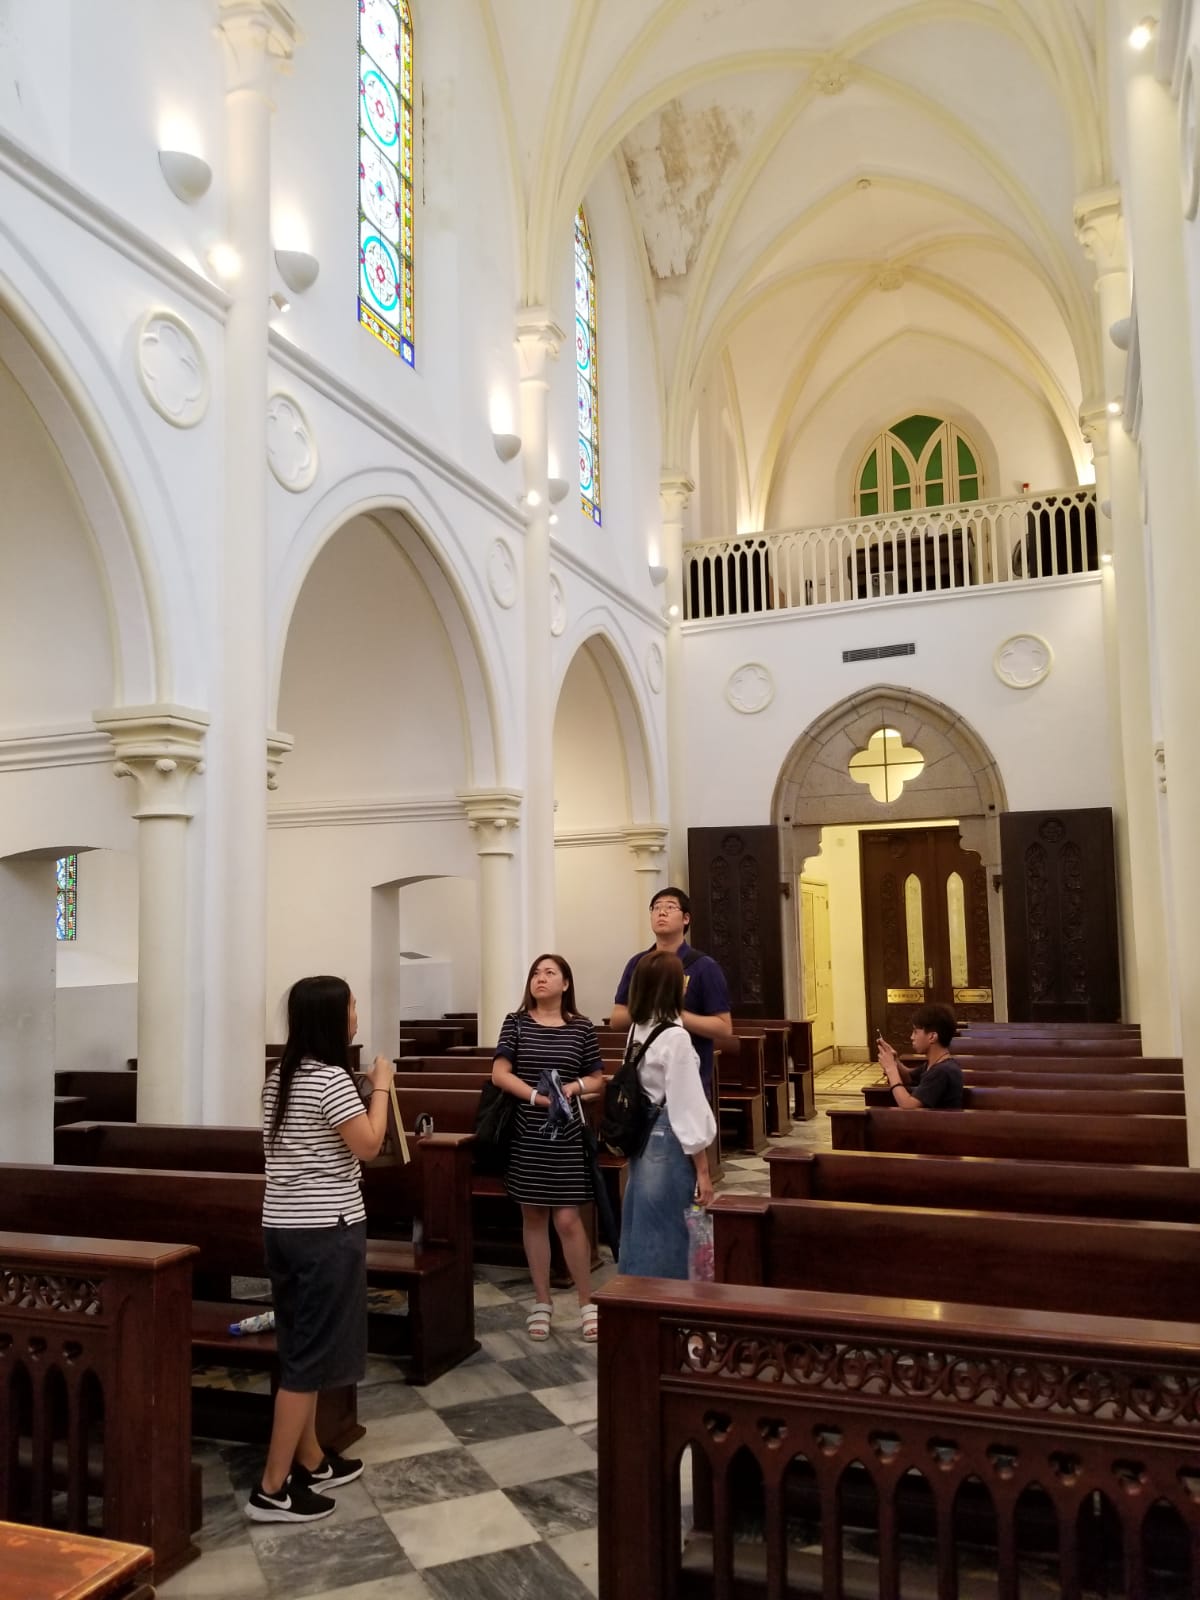 Queeny Ng婚禮統籌師工作紀錄: 伯大尼教堂 - 籌備佈置場地